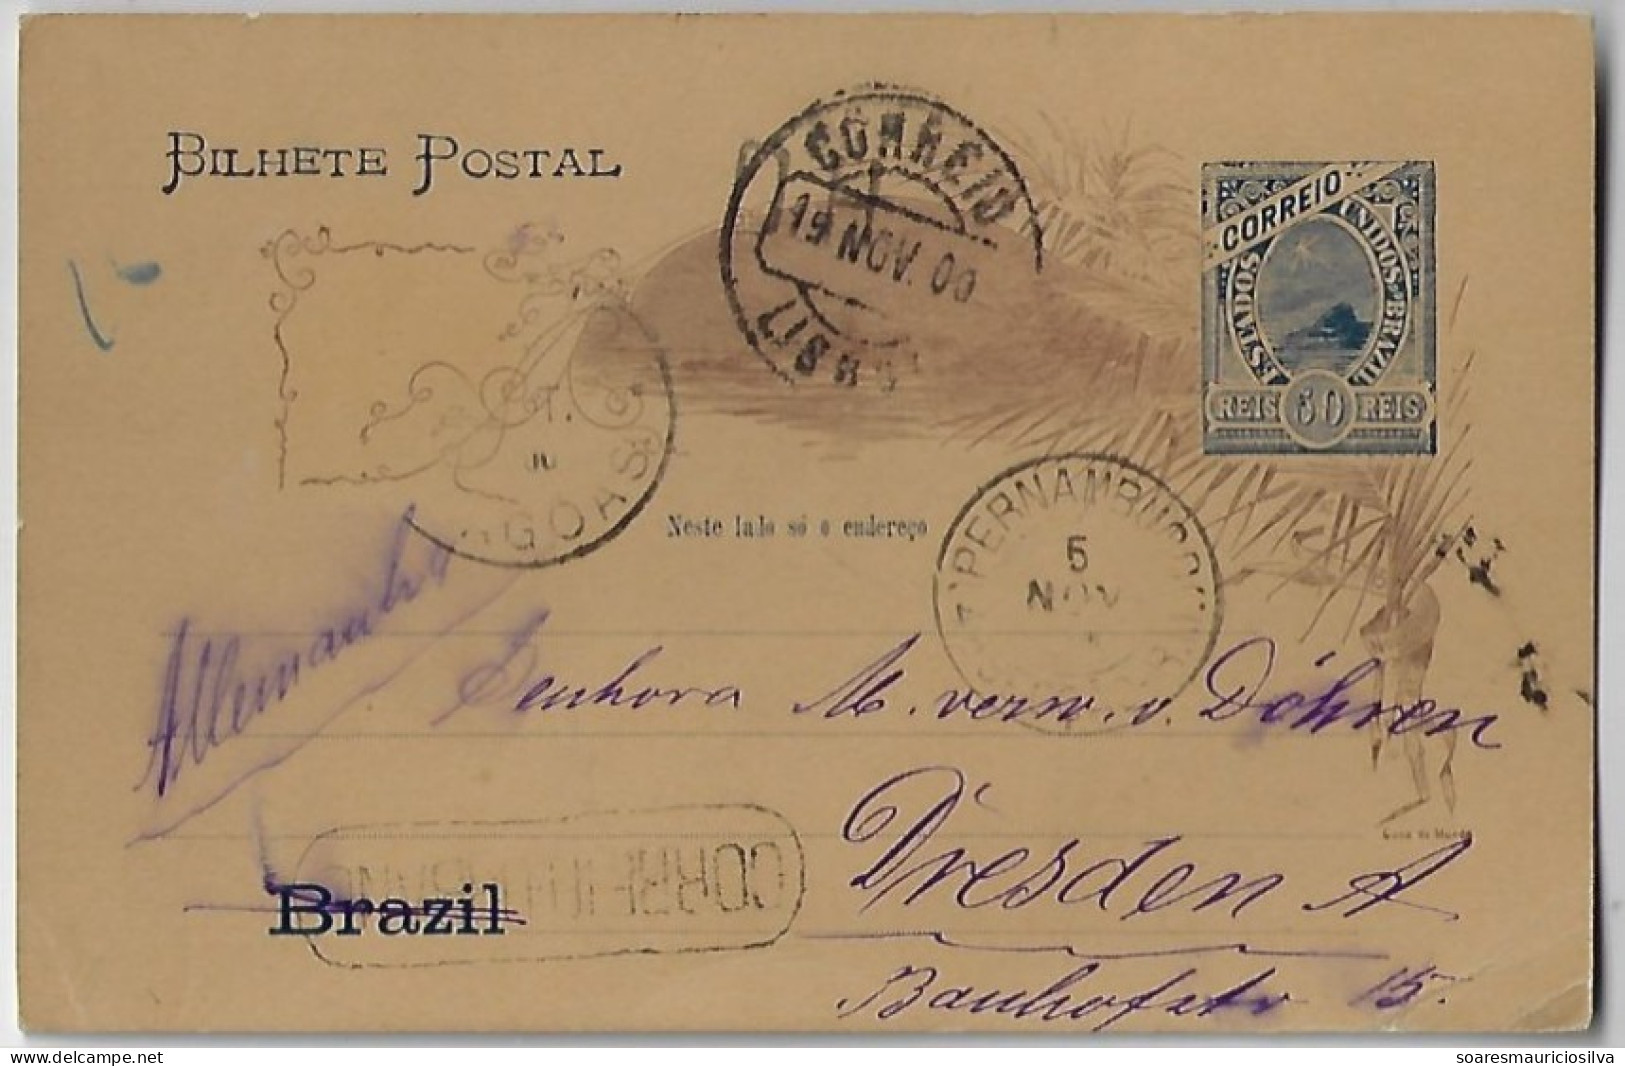 Brazil 1900 Postal Stationery Card Maceió - Recife - Lisboa Portugal - Dresden Germany Cancel Correio Urbano Urban Mail - Ganzsachen